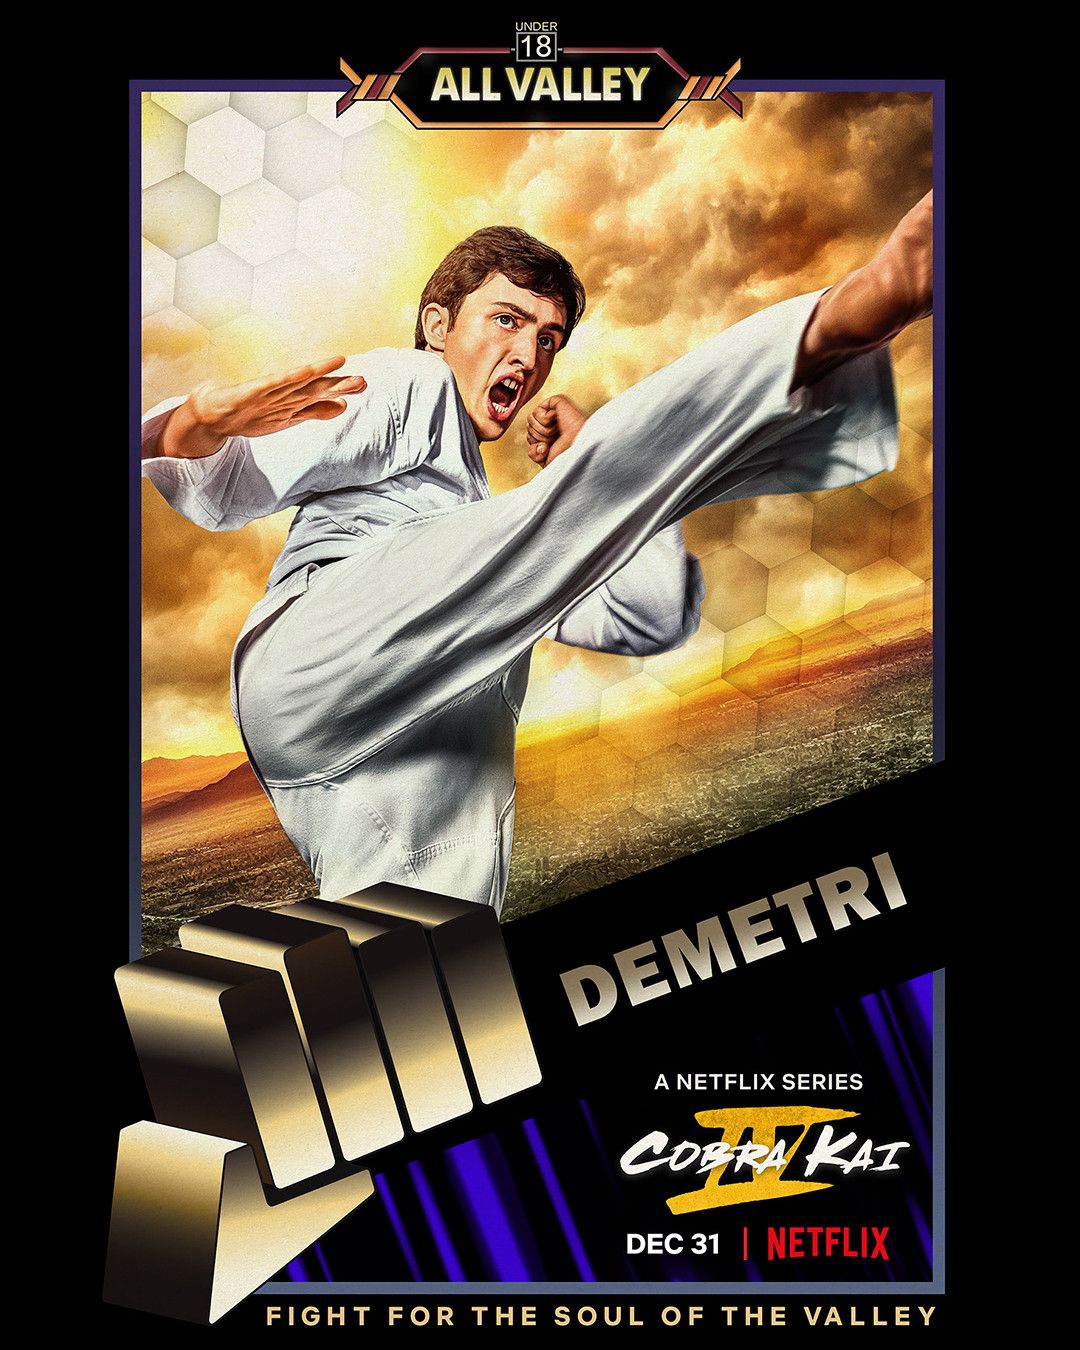 Demetri Cobra Kai character poster